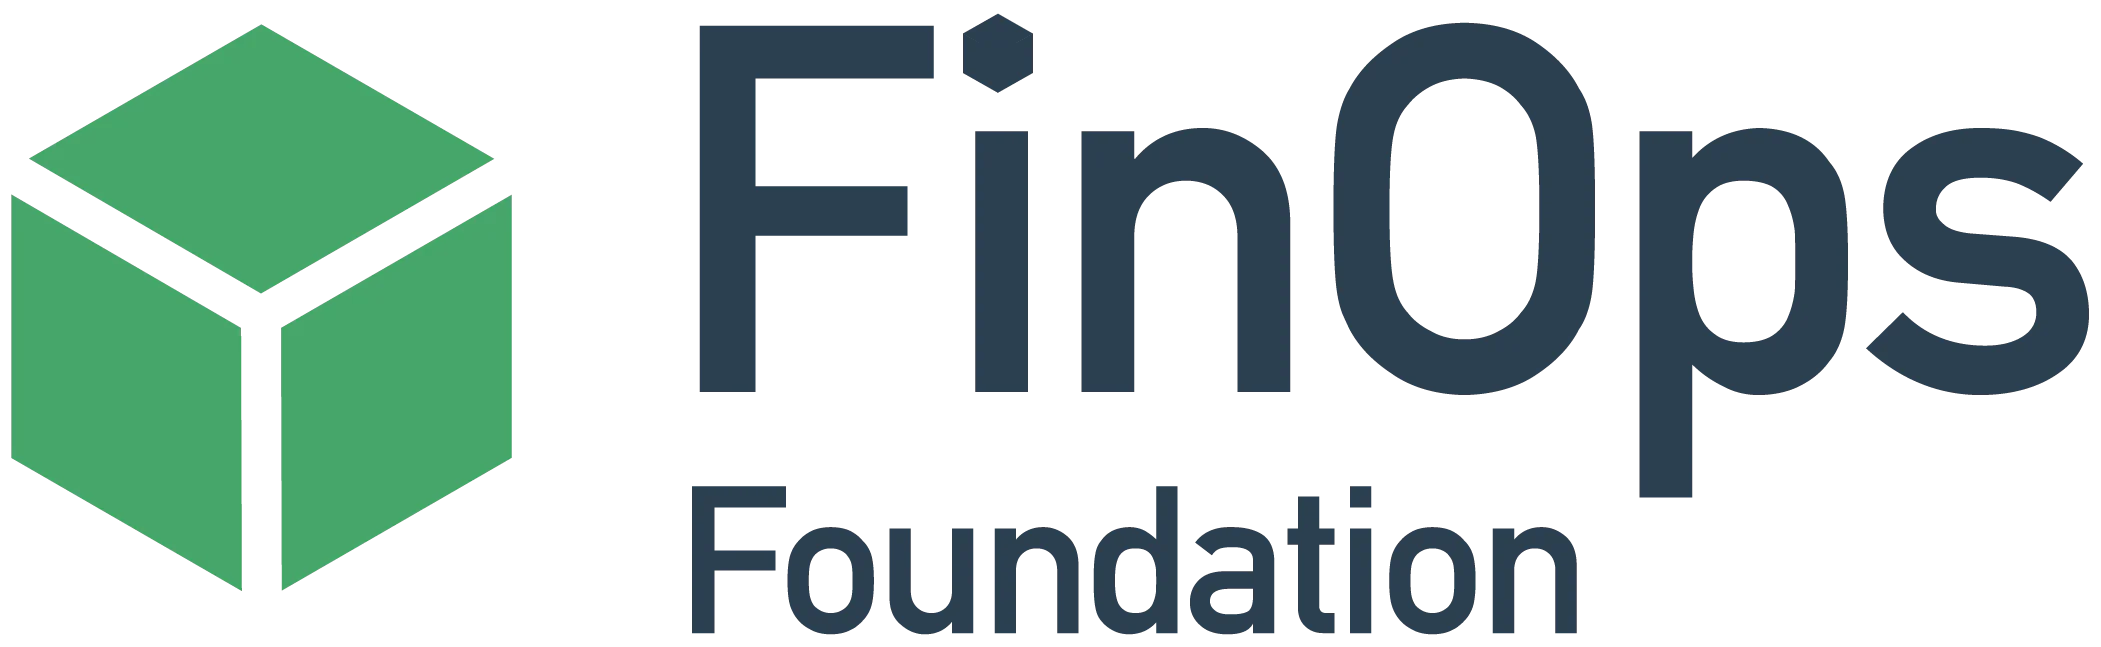 FinOps Foundation logo